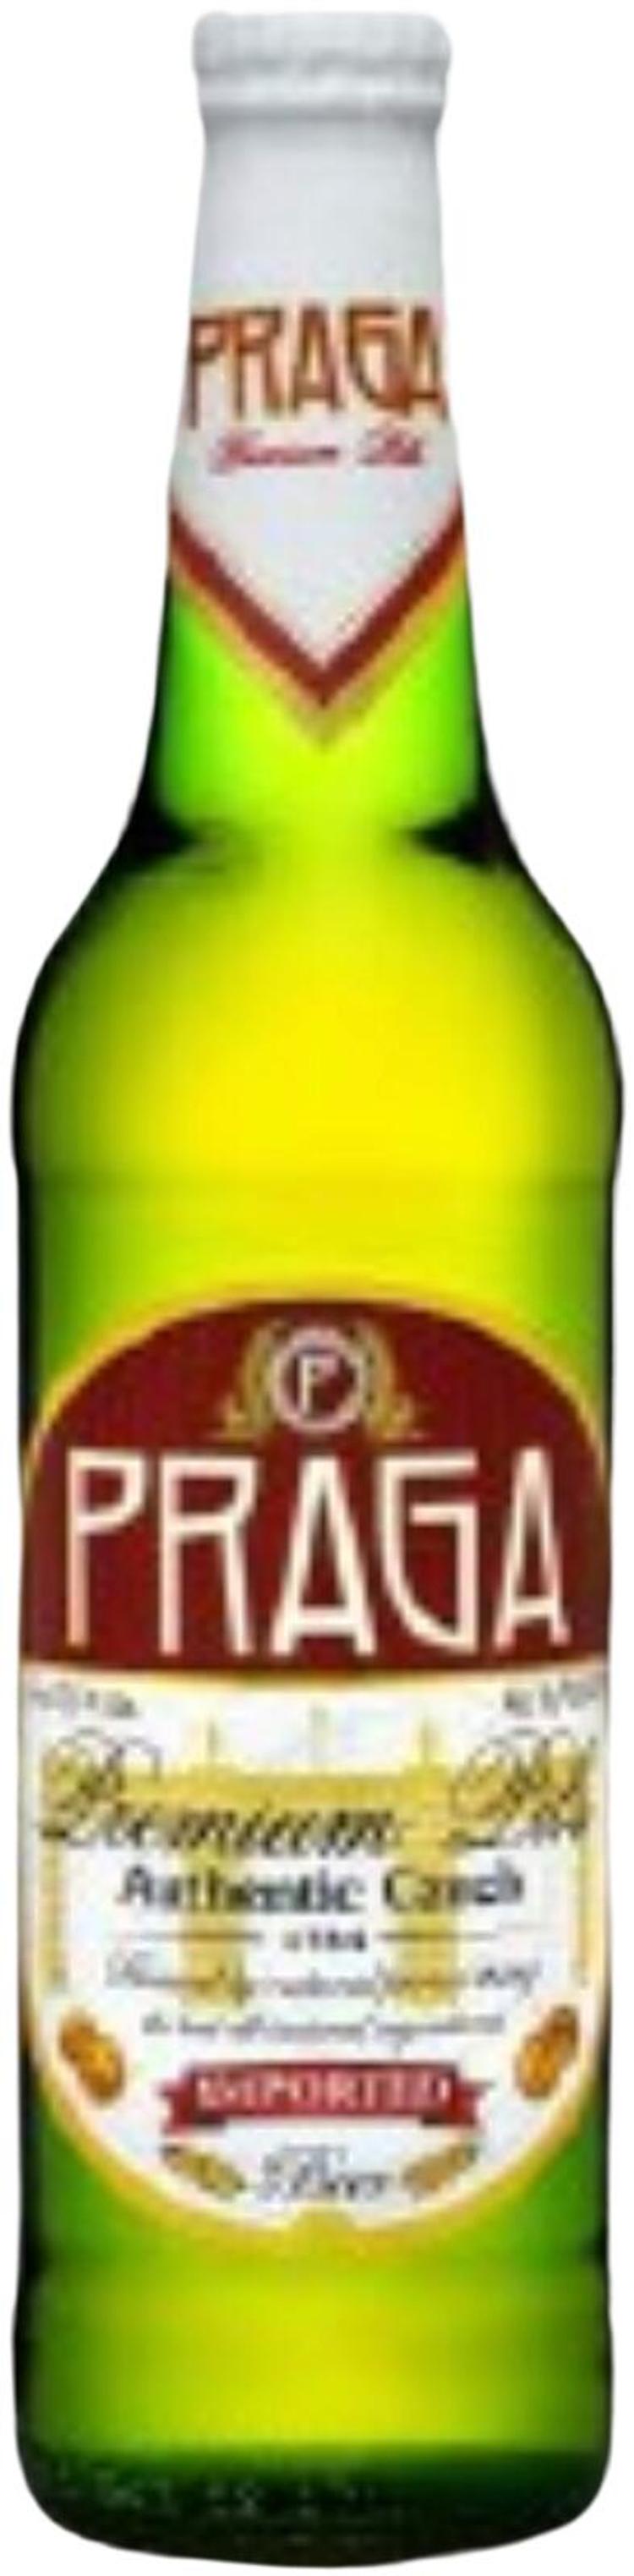 Praga pils 4,7% 50cl plo